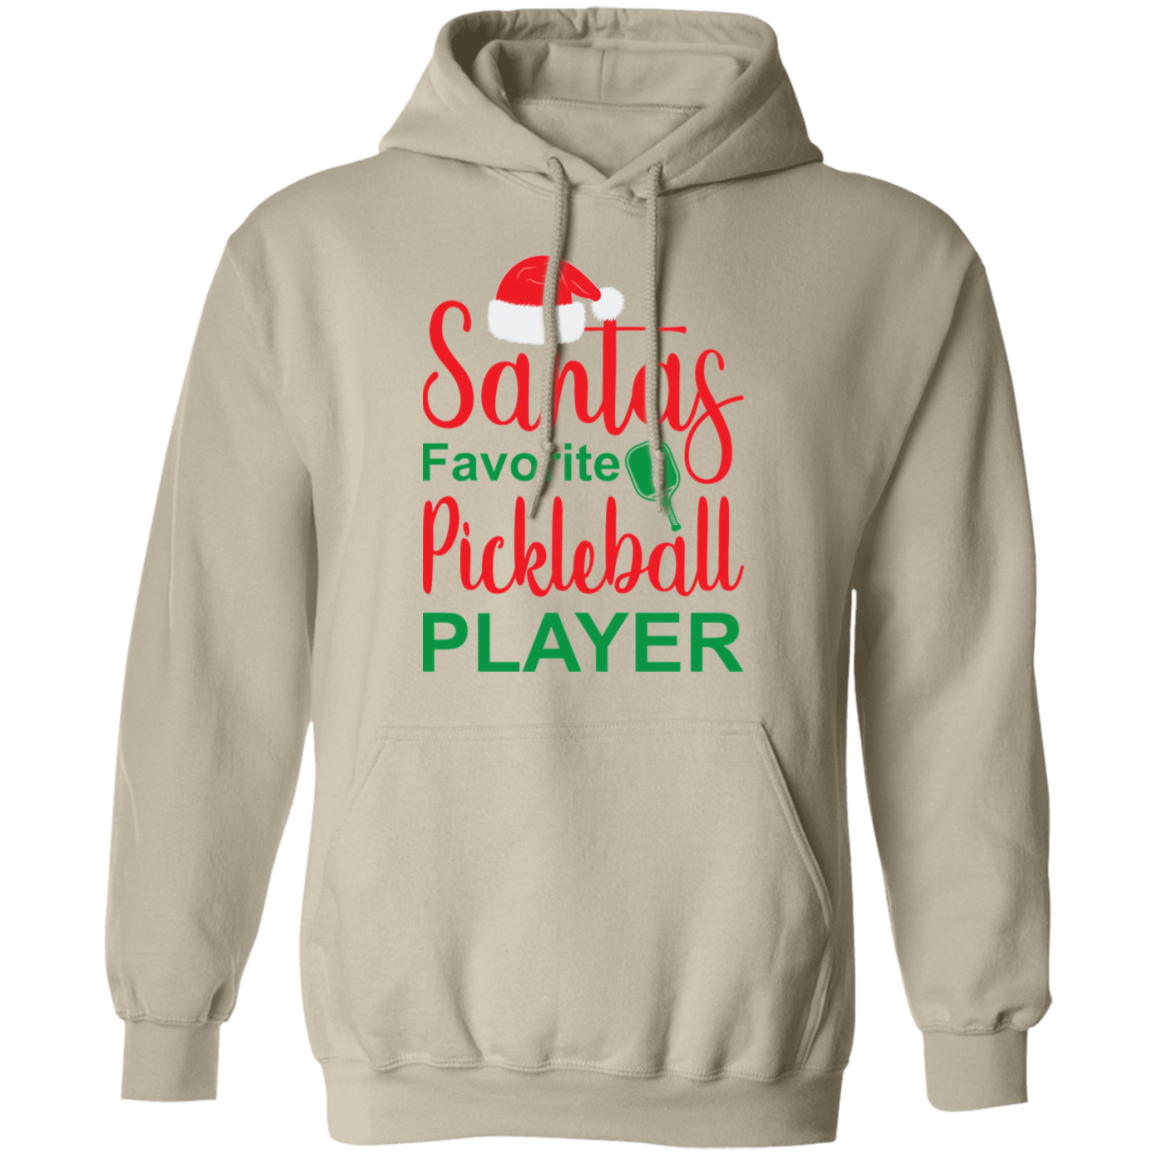 Santa's Favorite Pickleball Player  Pullover Hoodie